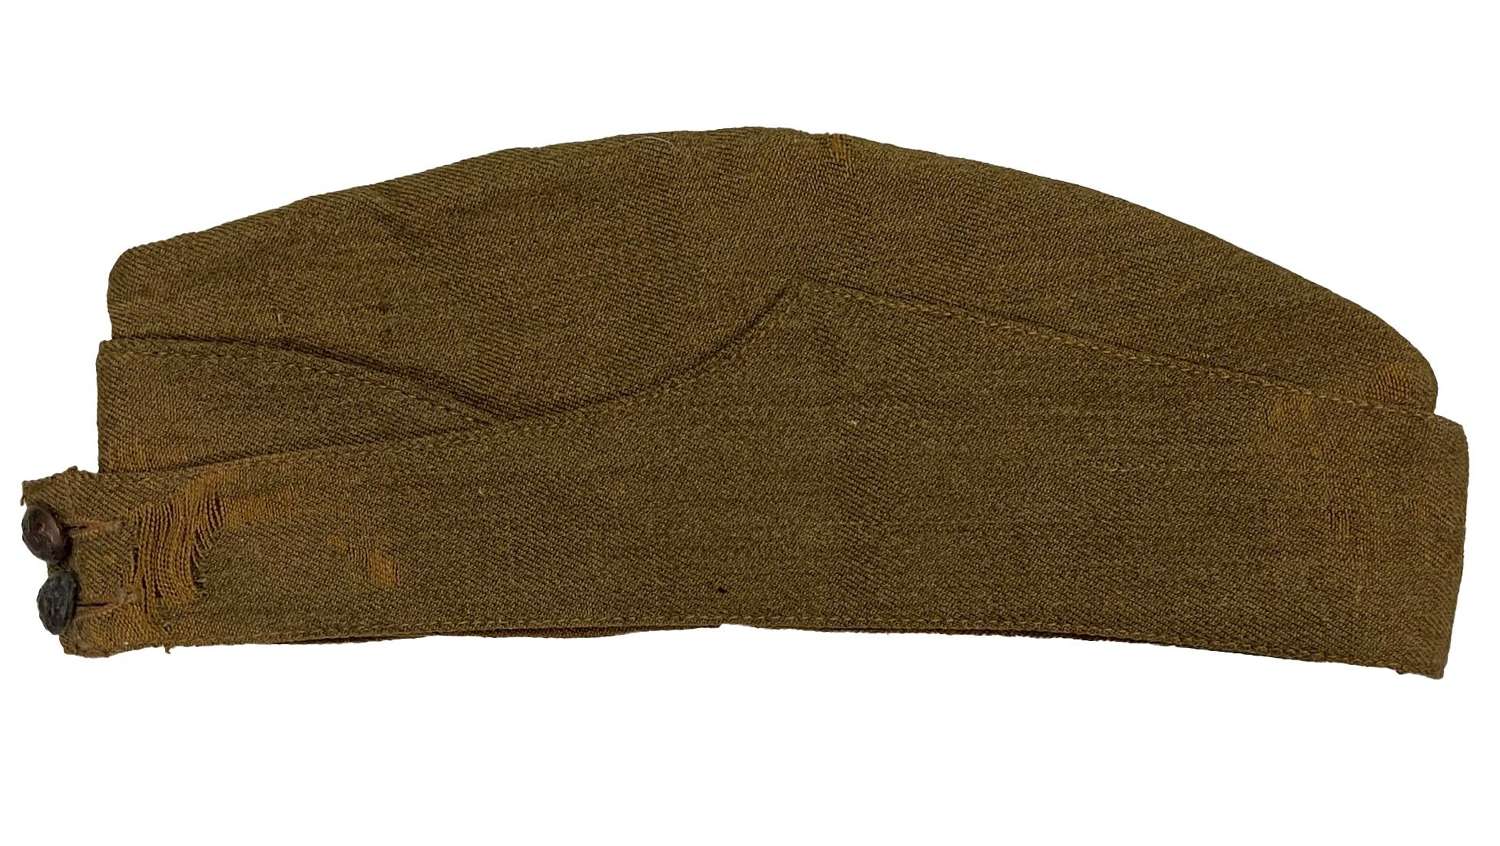 Original 1941 Dated British Army Field Service Cap - Size 6 7/8